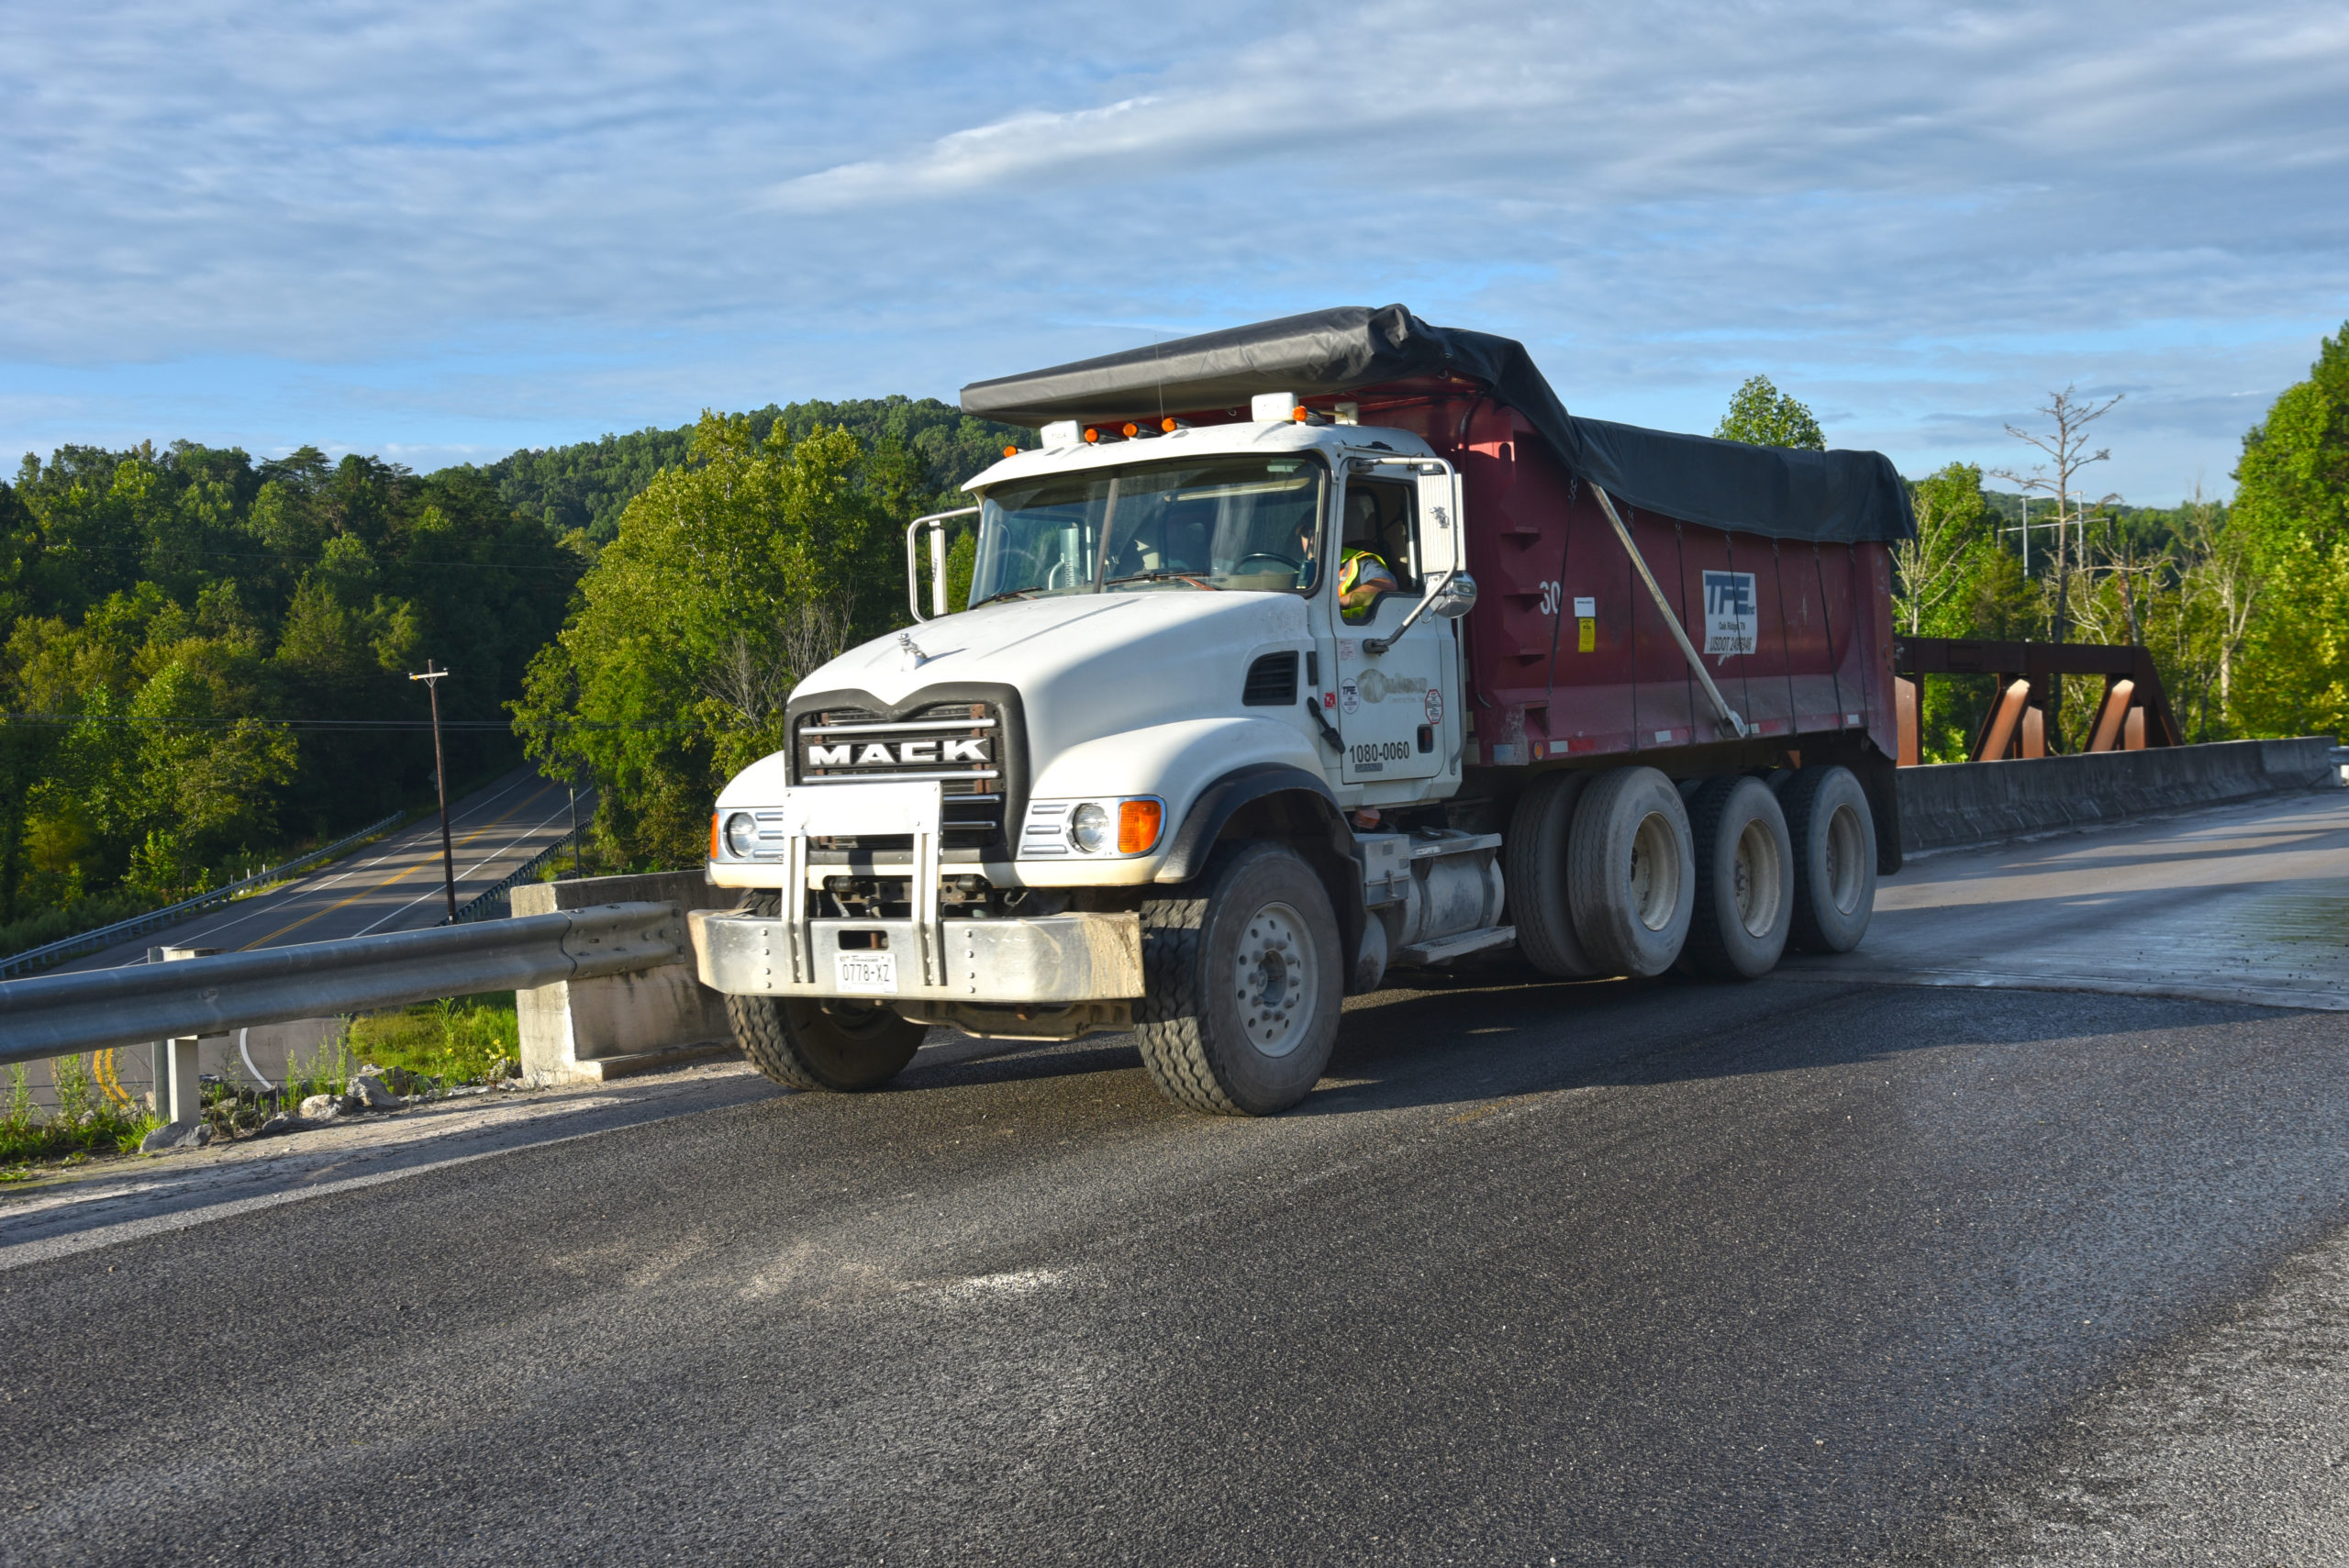 Photo: Truck hauling demolition debris